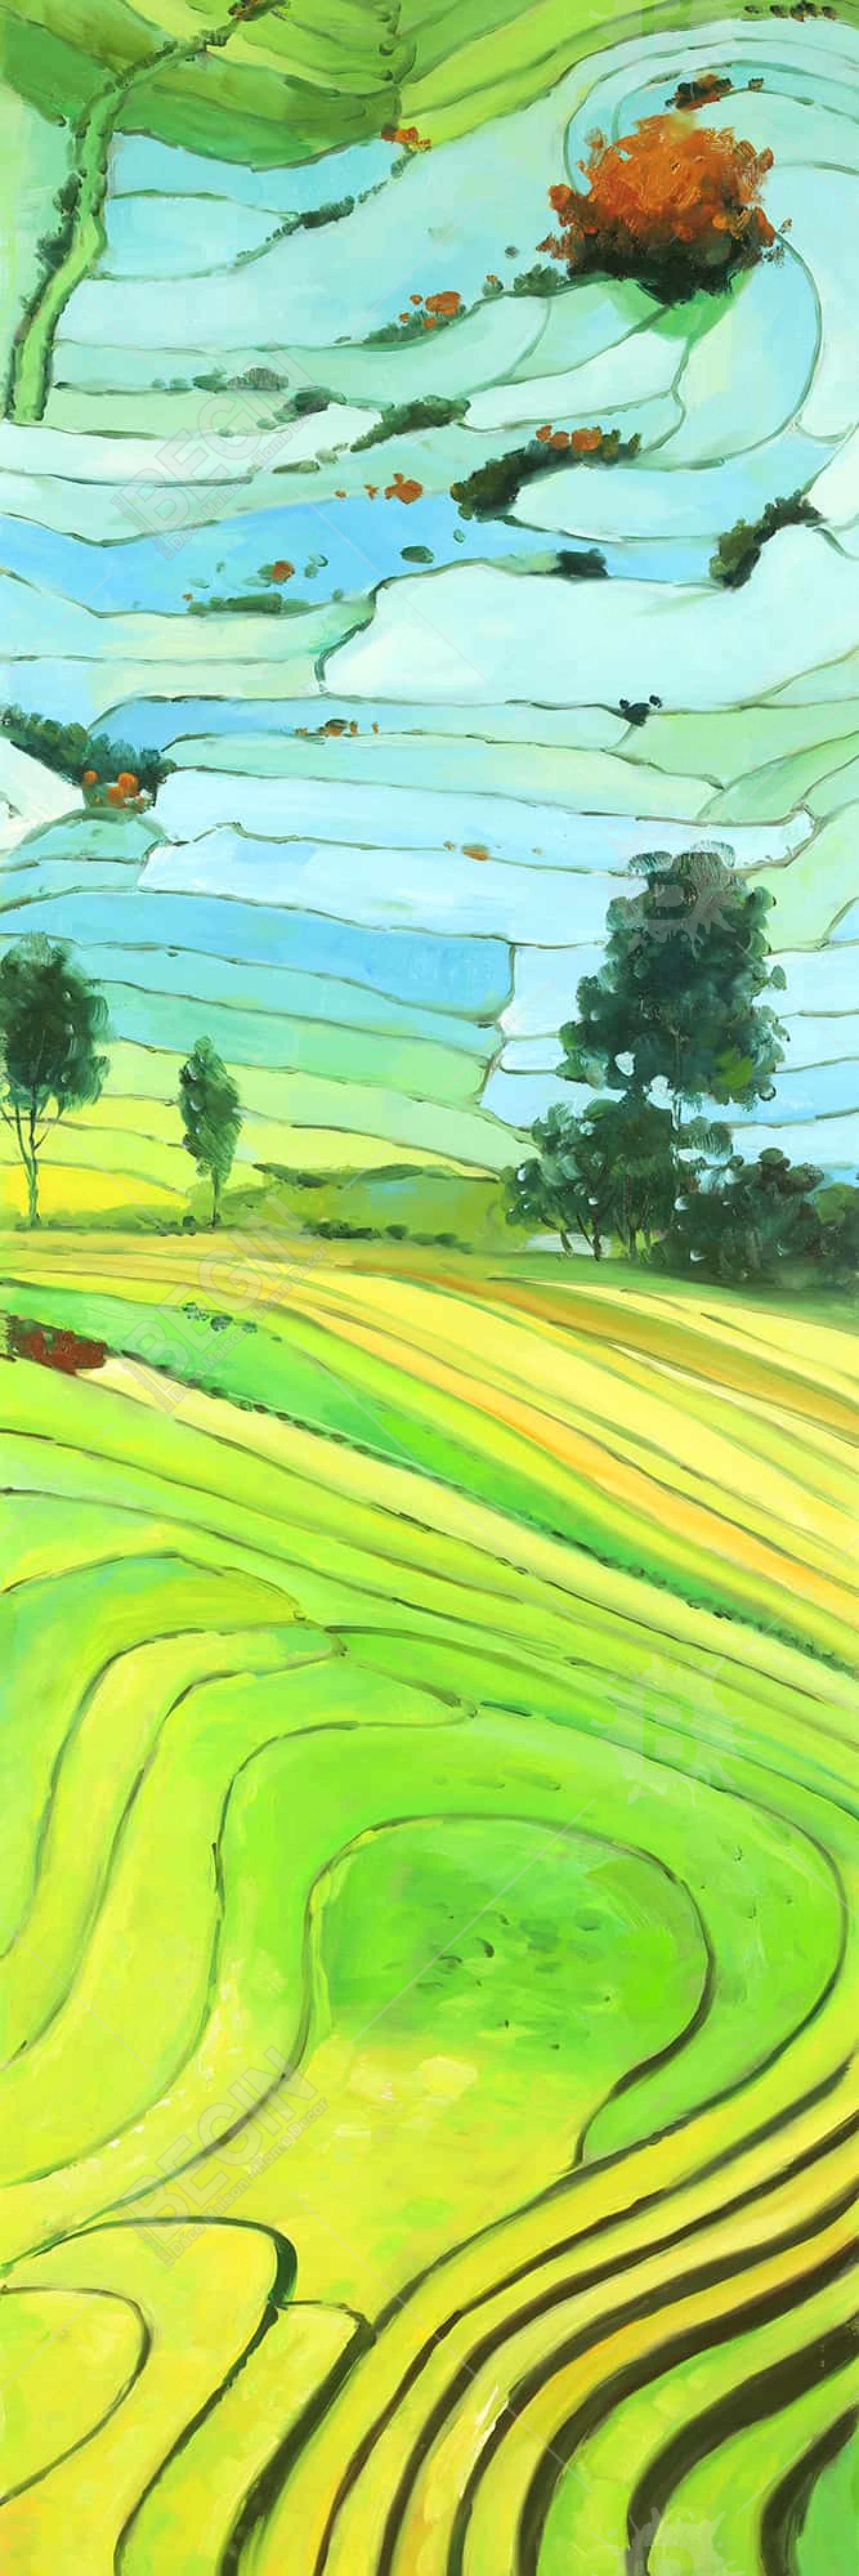 Rice fields of vietnam